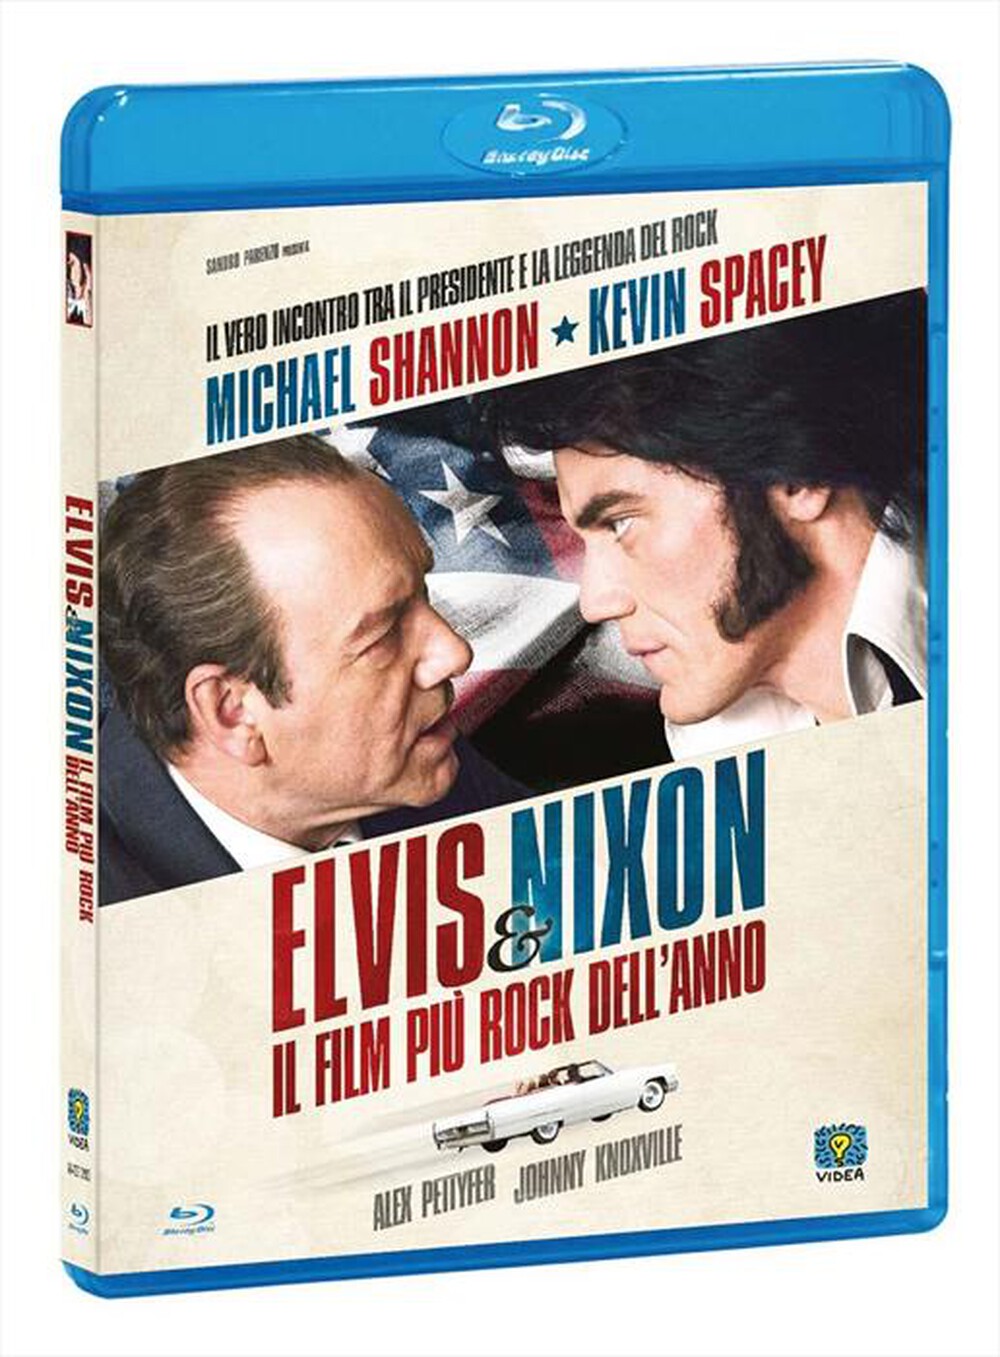 "EAGLE PICTURES - Elvis & Nixon"